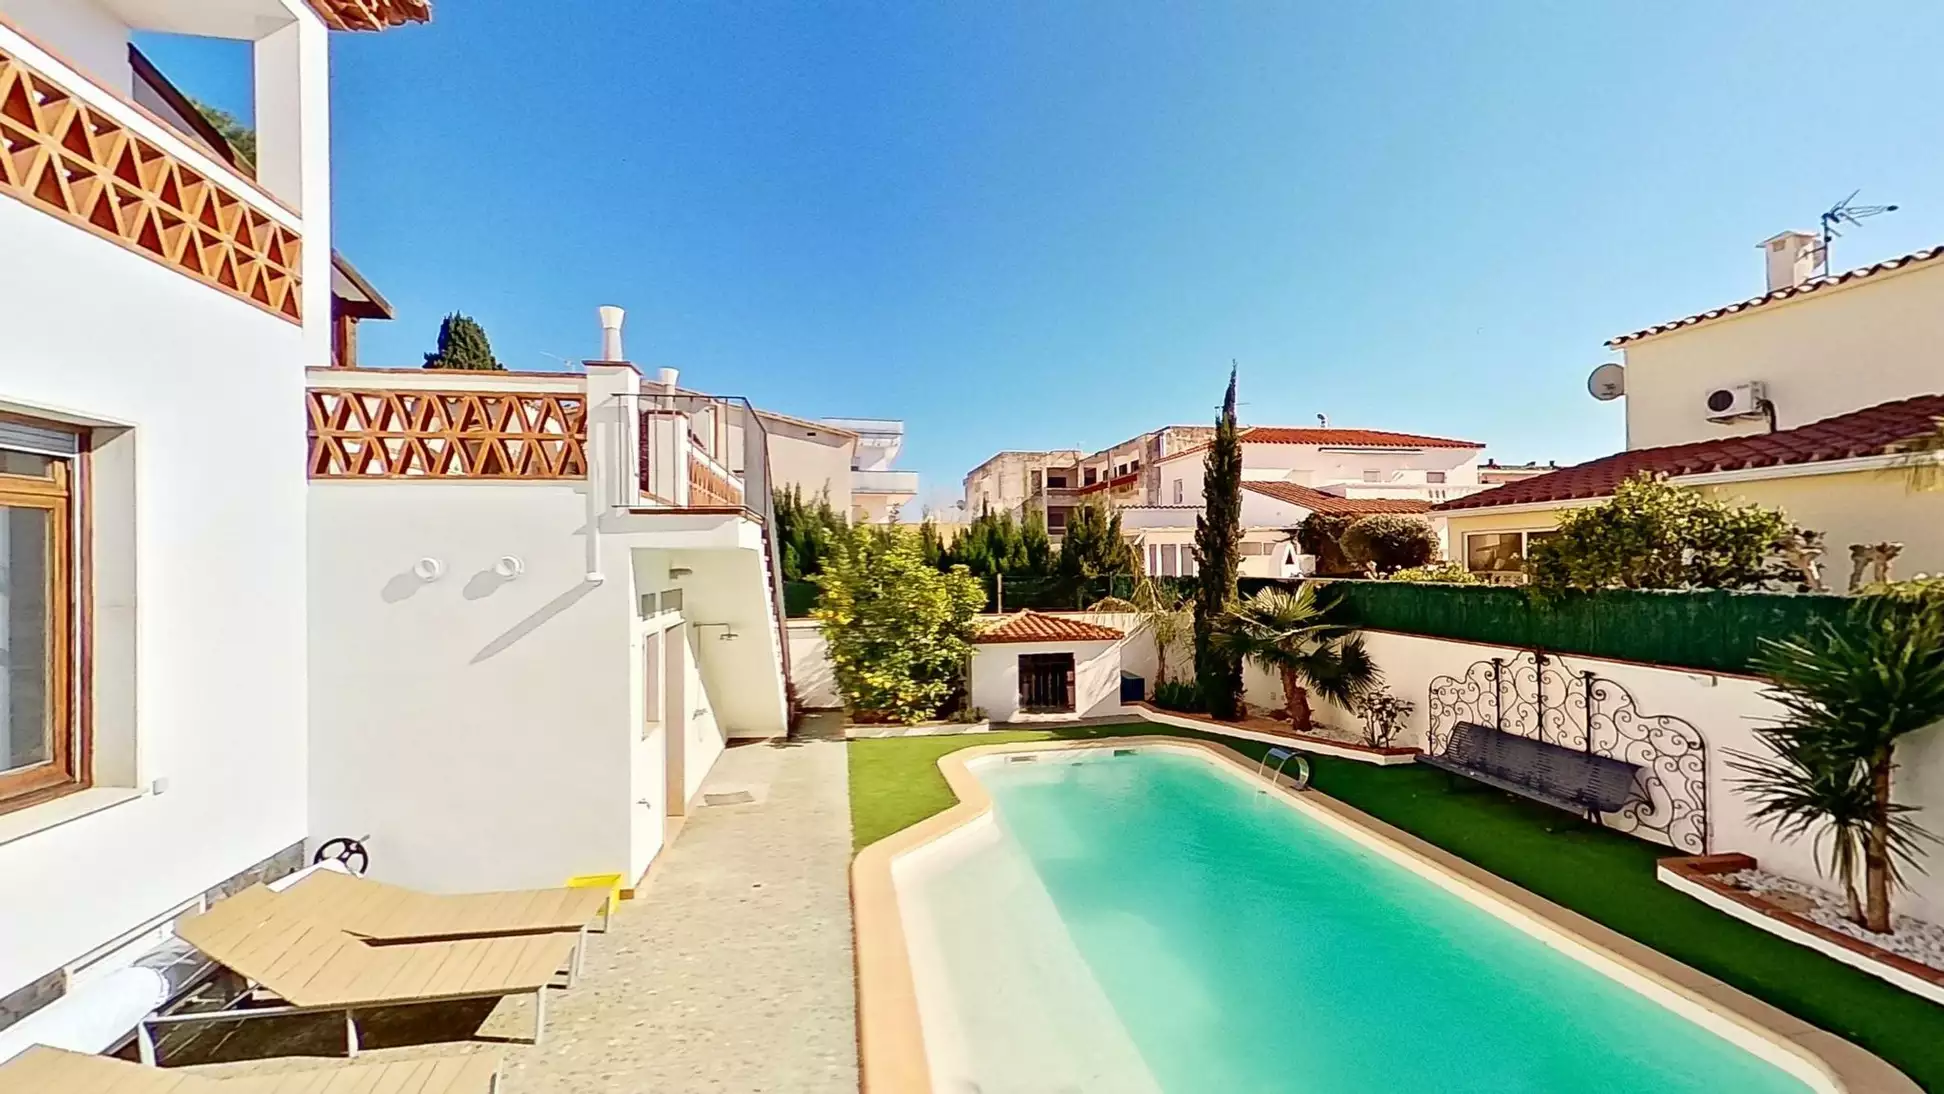 Detached house for sale in Empuriabrava (Costa Brava), your Mediterranean dream awaits you!